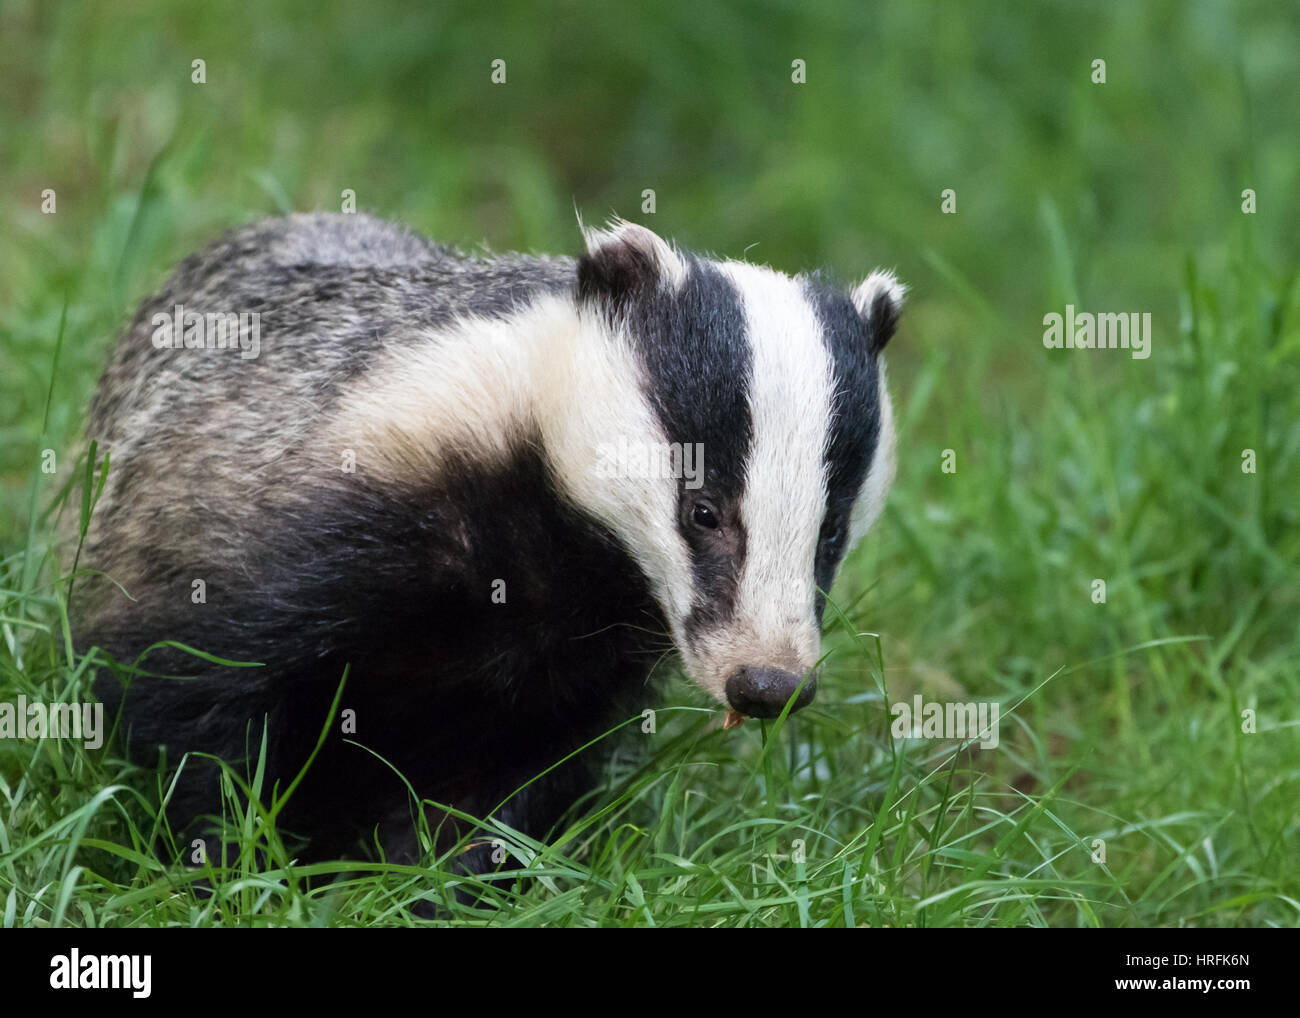 European Badger (Meles meles) in British woodland Stock Photo